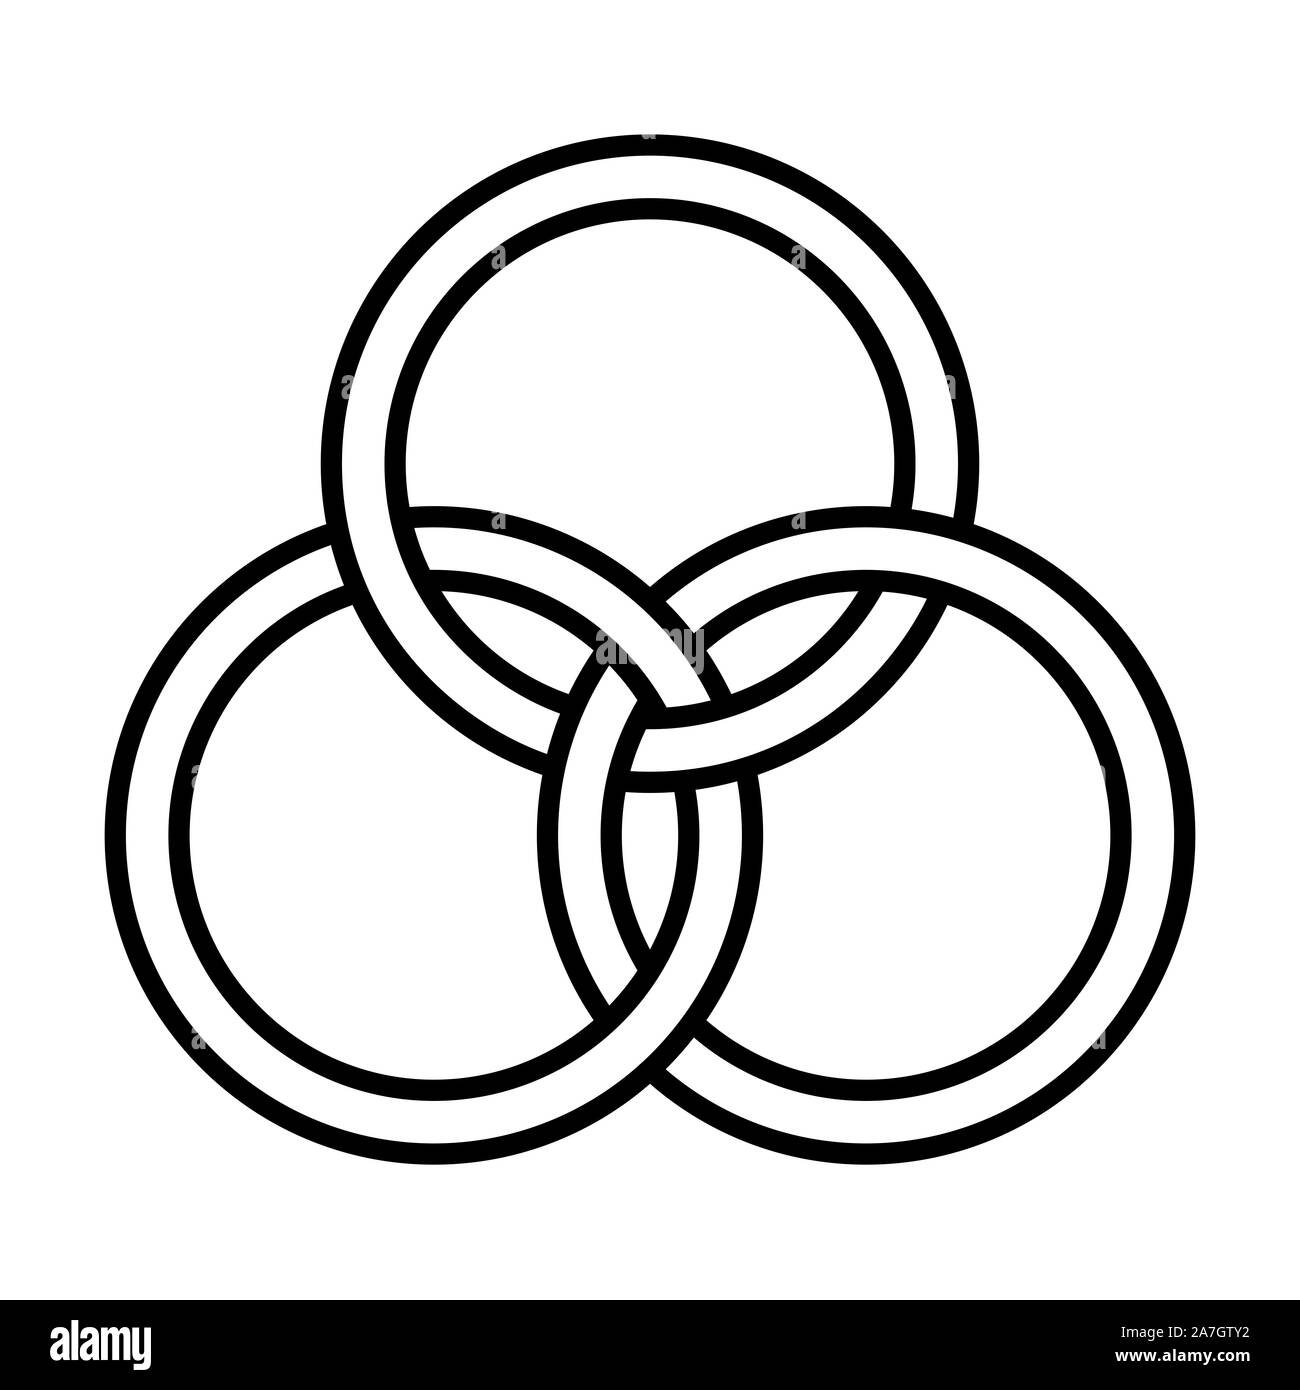 Borromean rings symbol Stock Photo